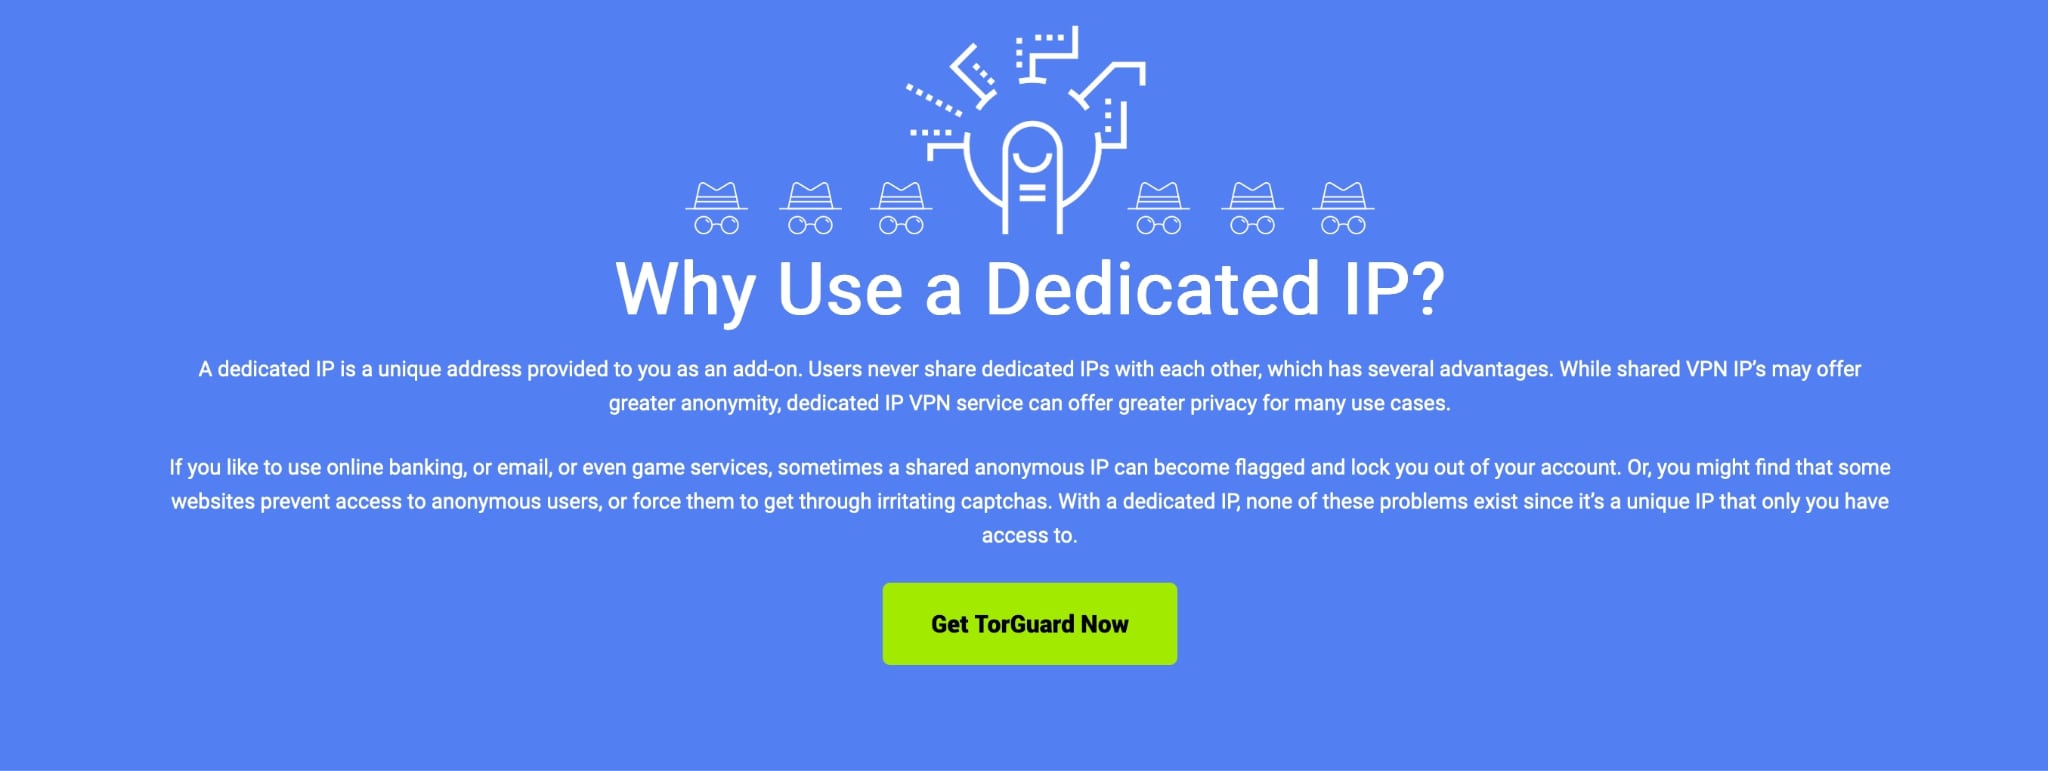 TorGuard’s dedicated IP.